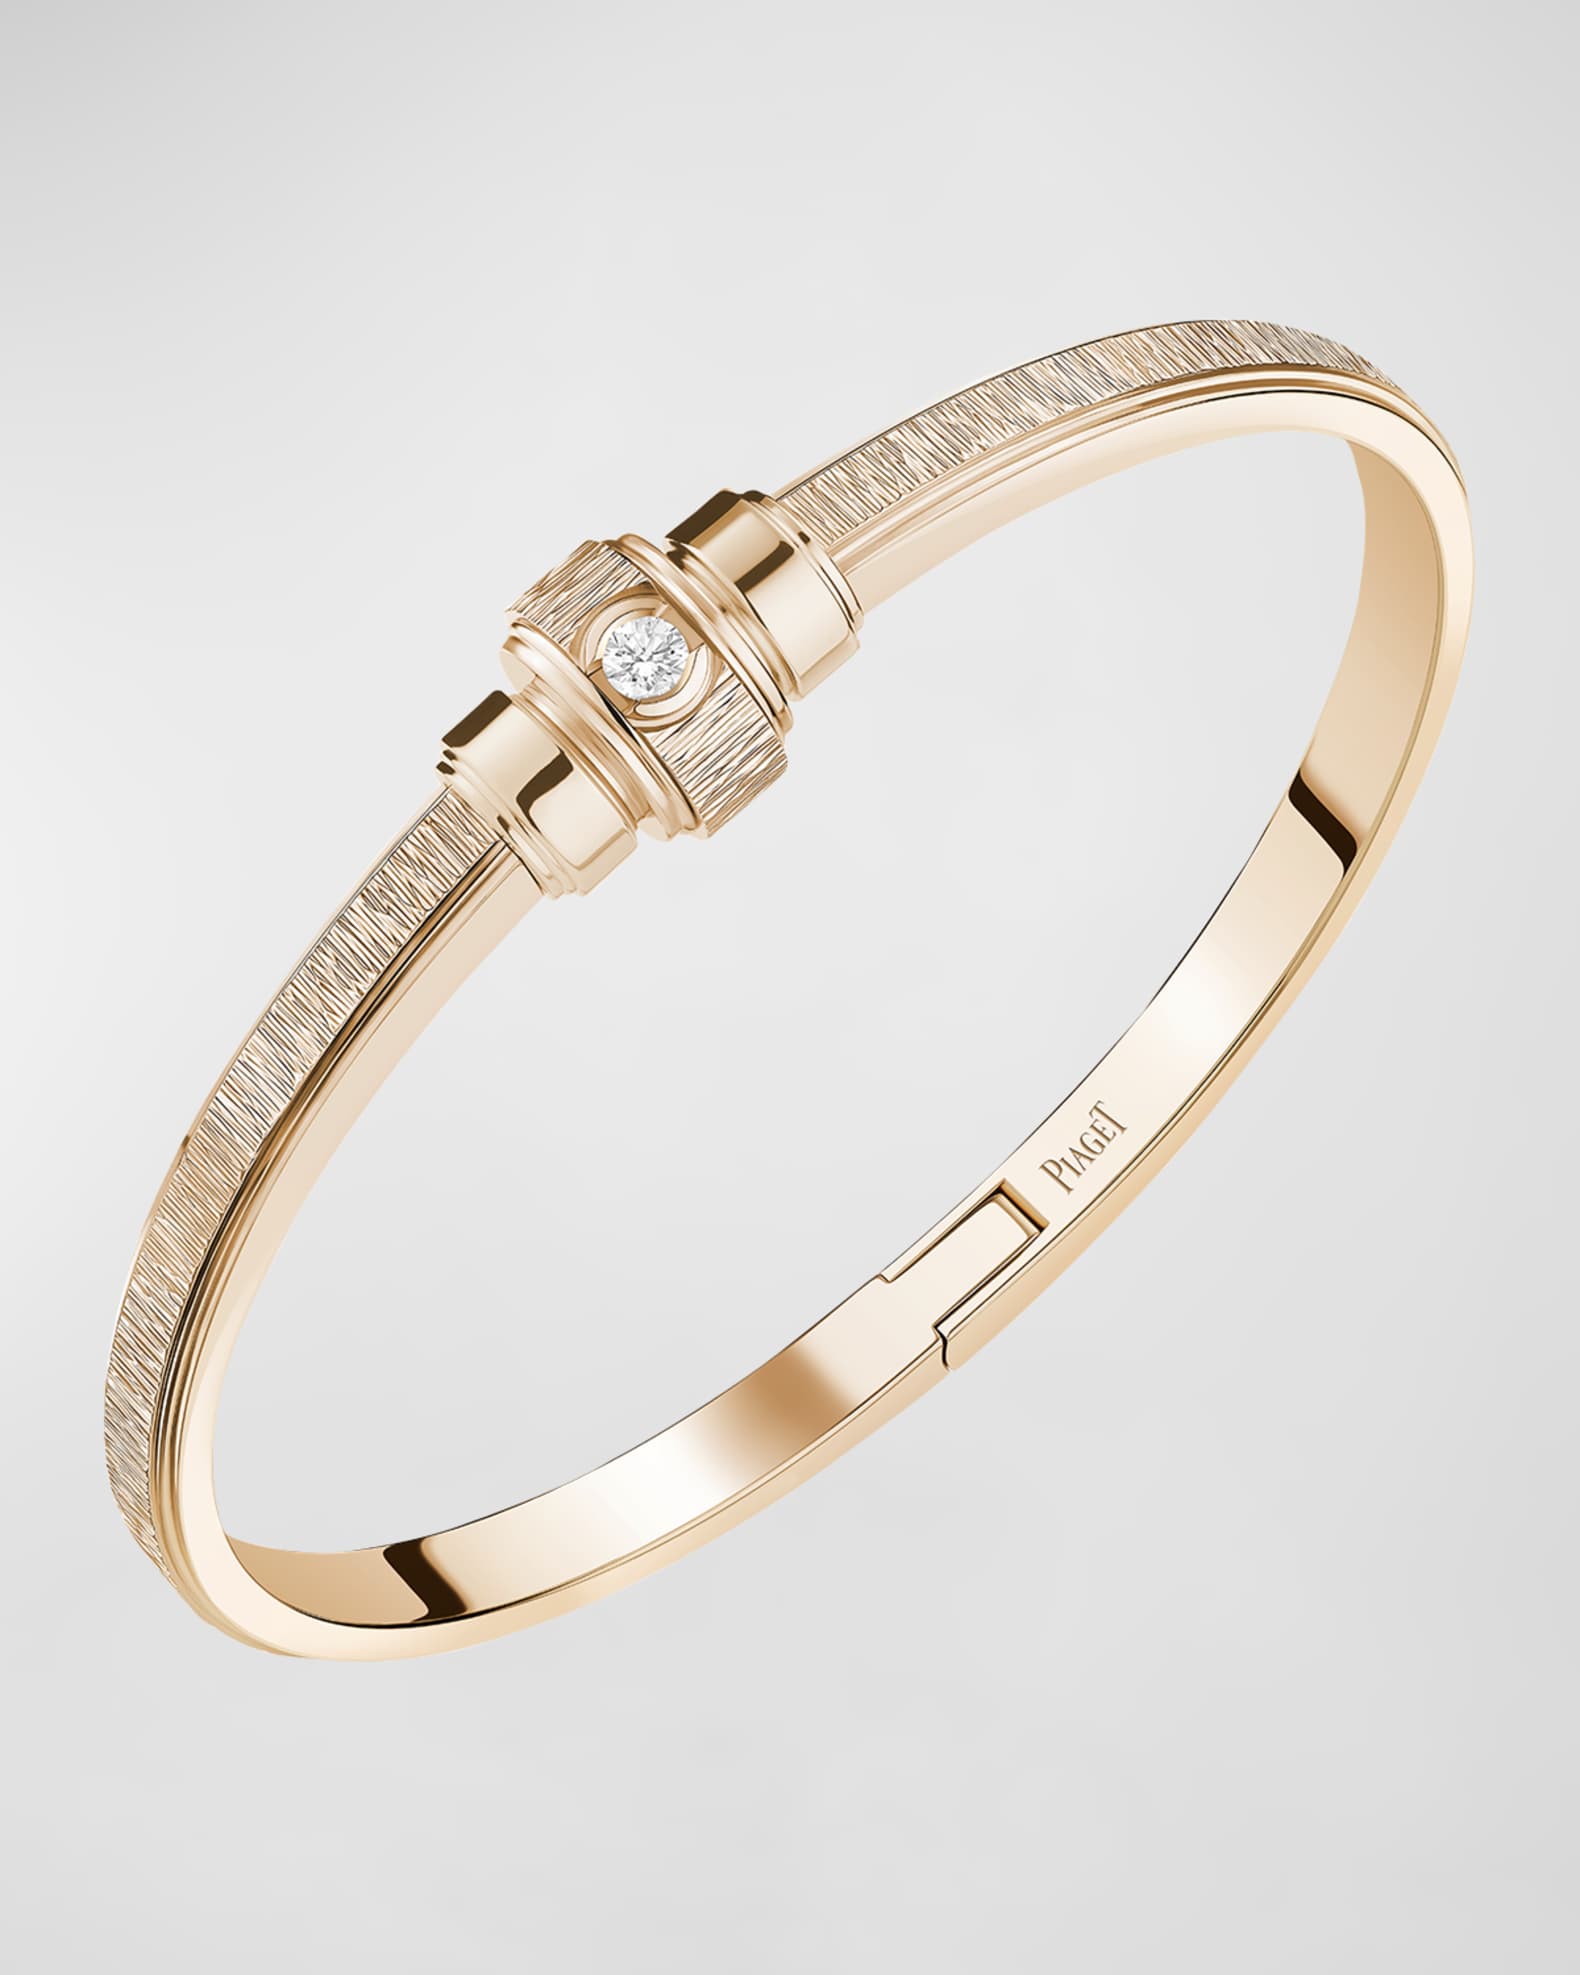 Hermes New Black/ Rose Gold Narrow Hinged Bracelet Sz M